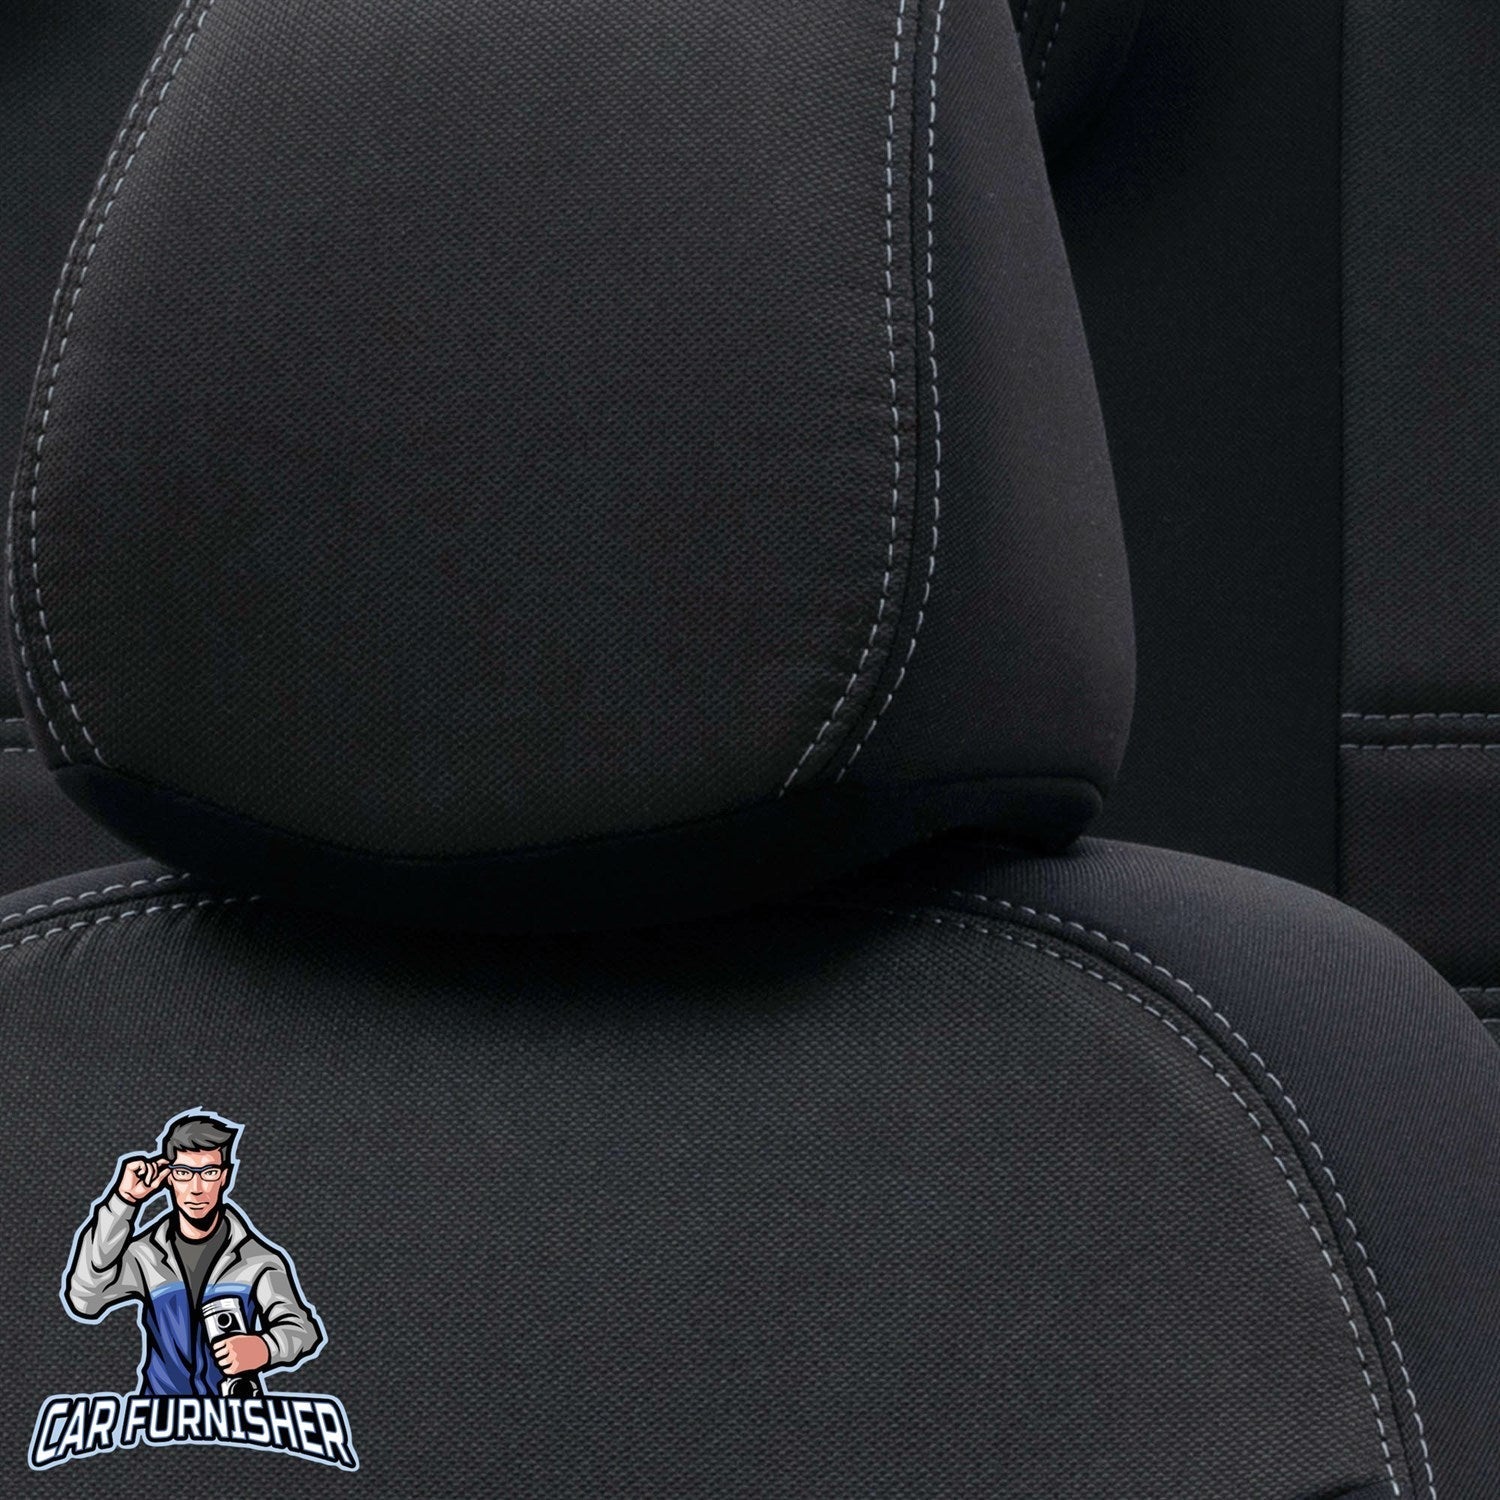 Renault Master Seat Covers Original Jacquard Design Black Jacquard Fabric